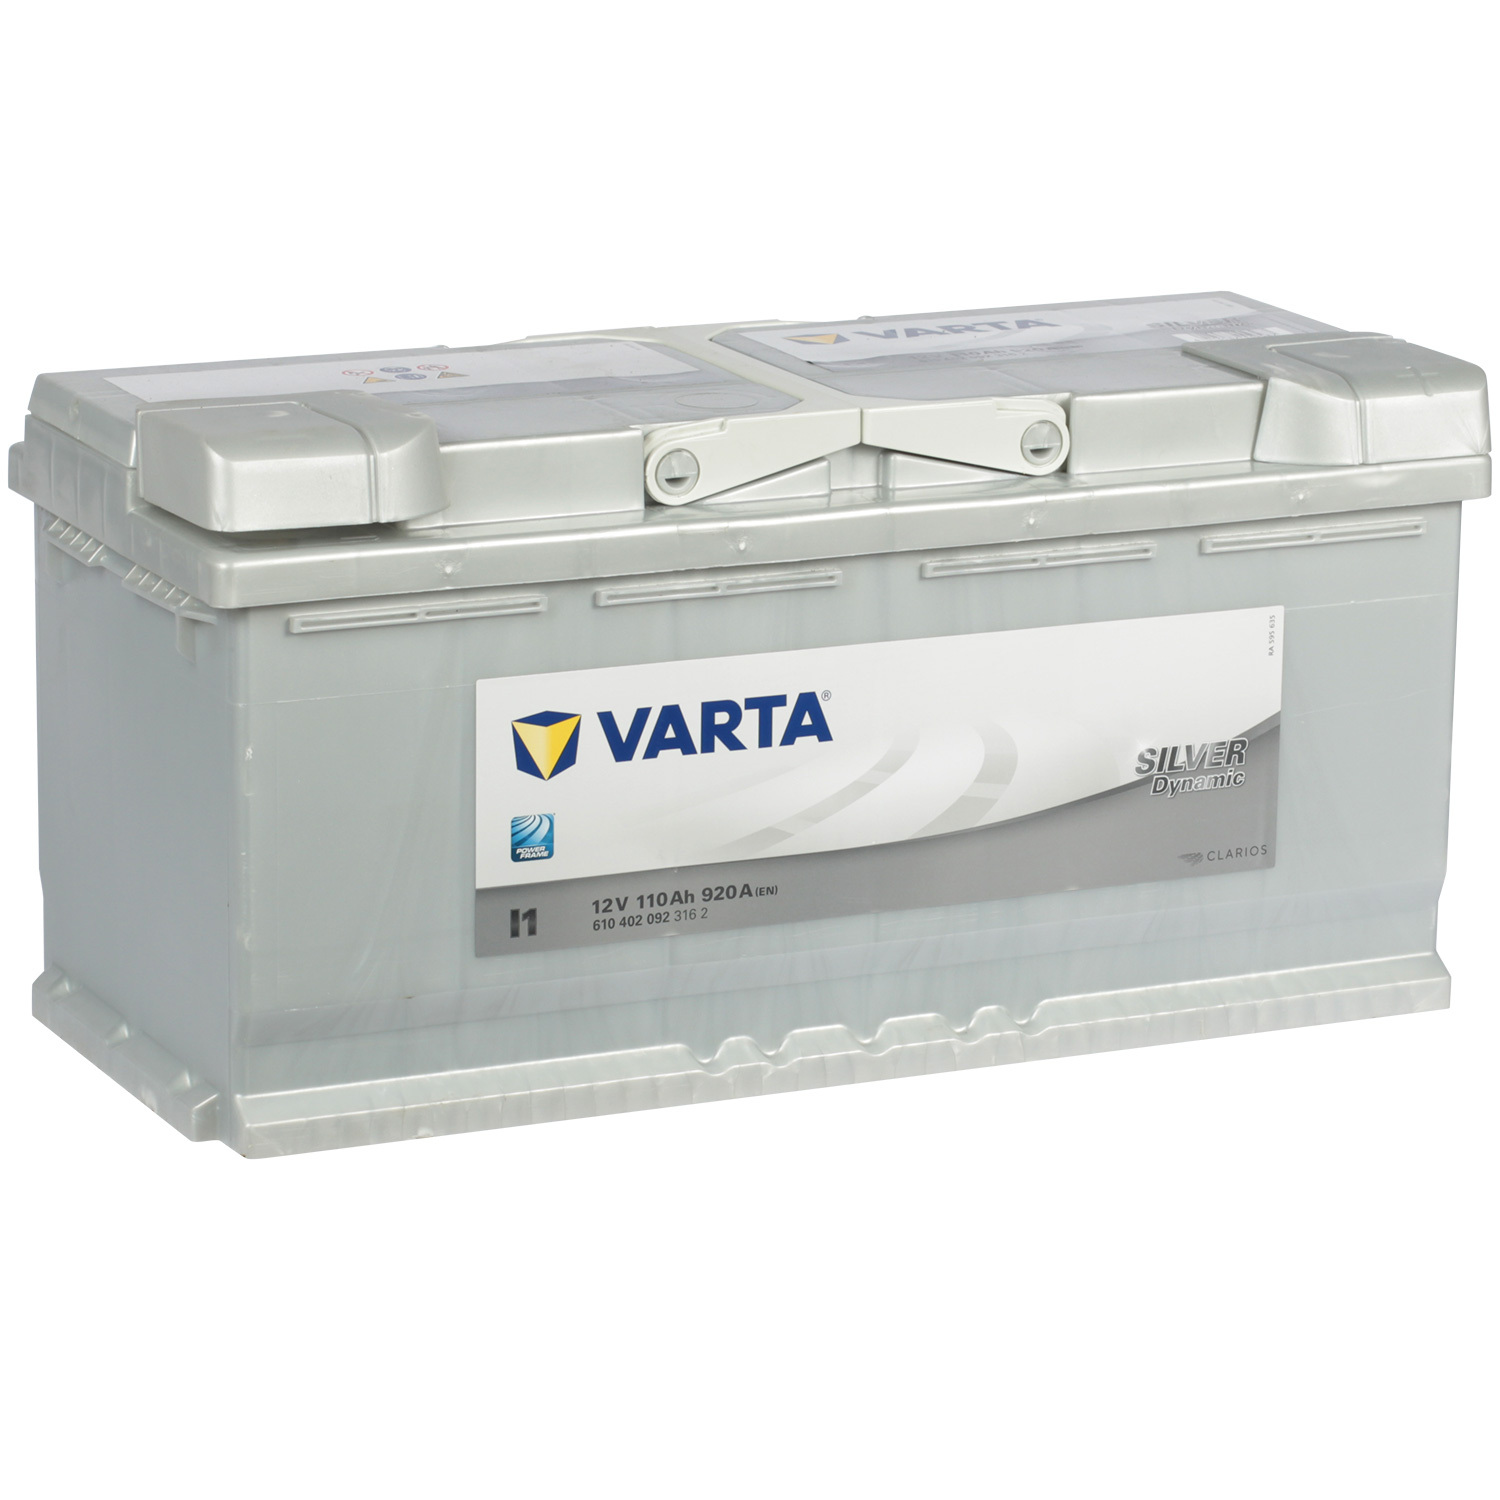 Varta Автомобильный аккумулятор Varta Silver Dynamic I1 110 Ач обратная полярность L6 varta автомобильный аккумулятор varta 45 ач обратная полярность b24l